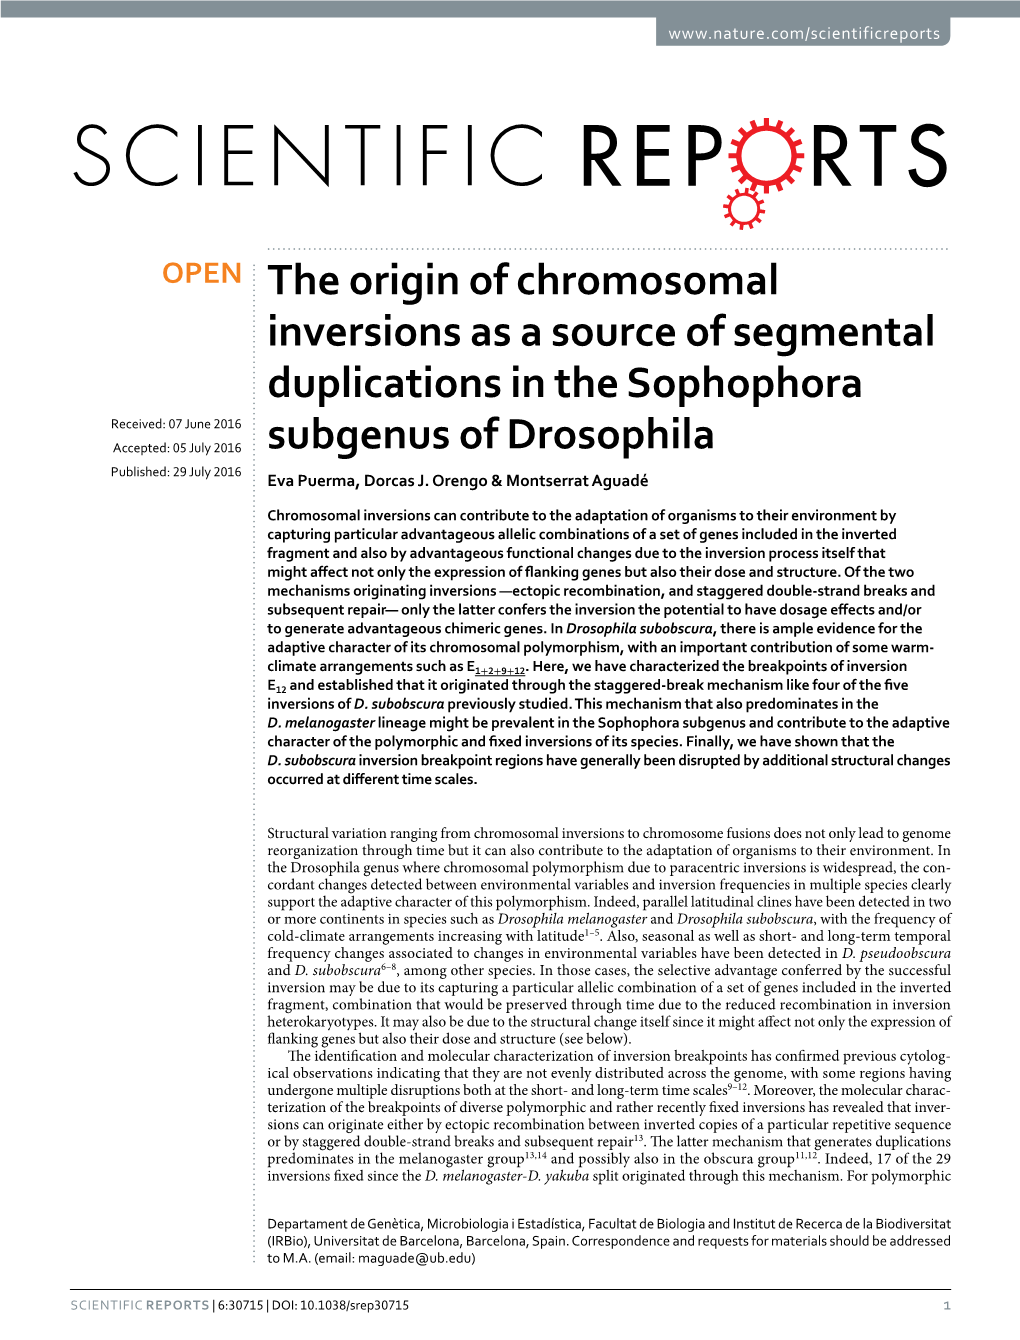 The Origin of Chromosomal Inversions As a Source of Segmental